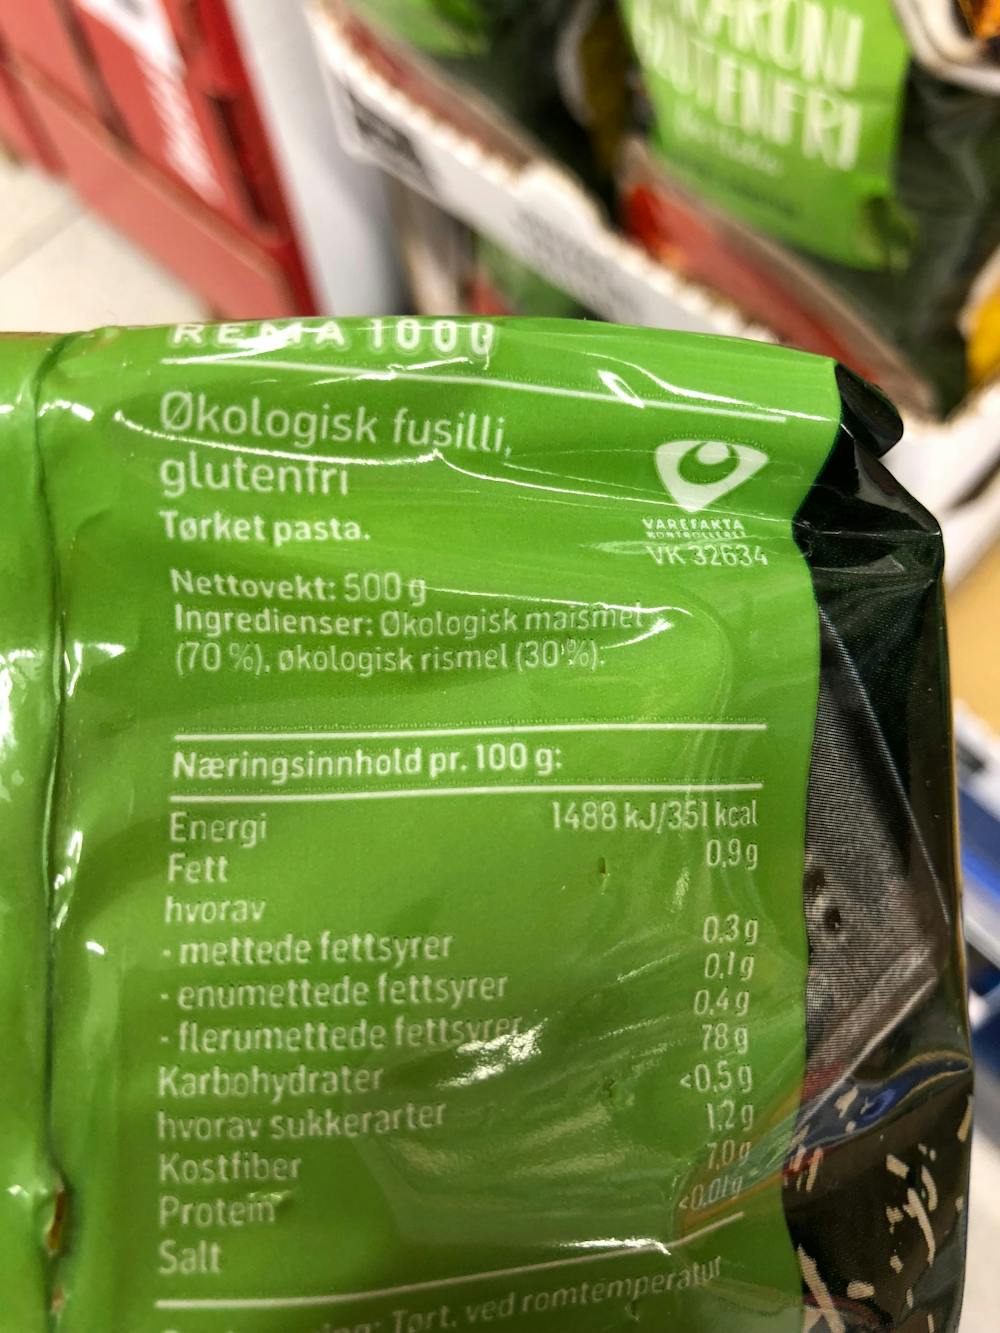 Ingredienslisten til Økologisk fusilli glutenfri, Rema 1000 üten